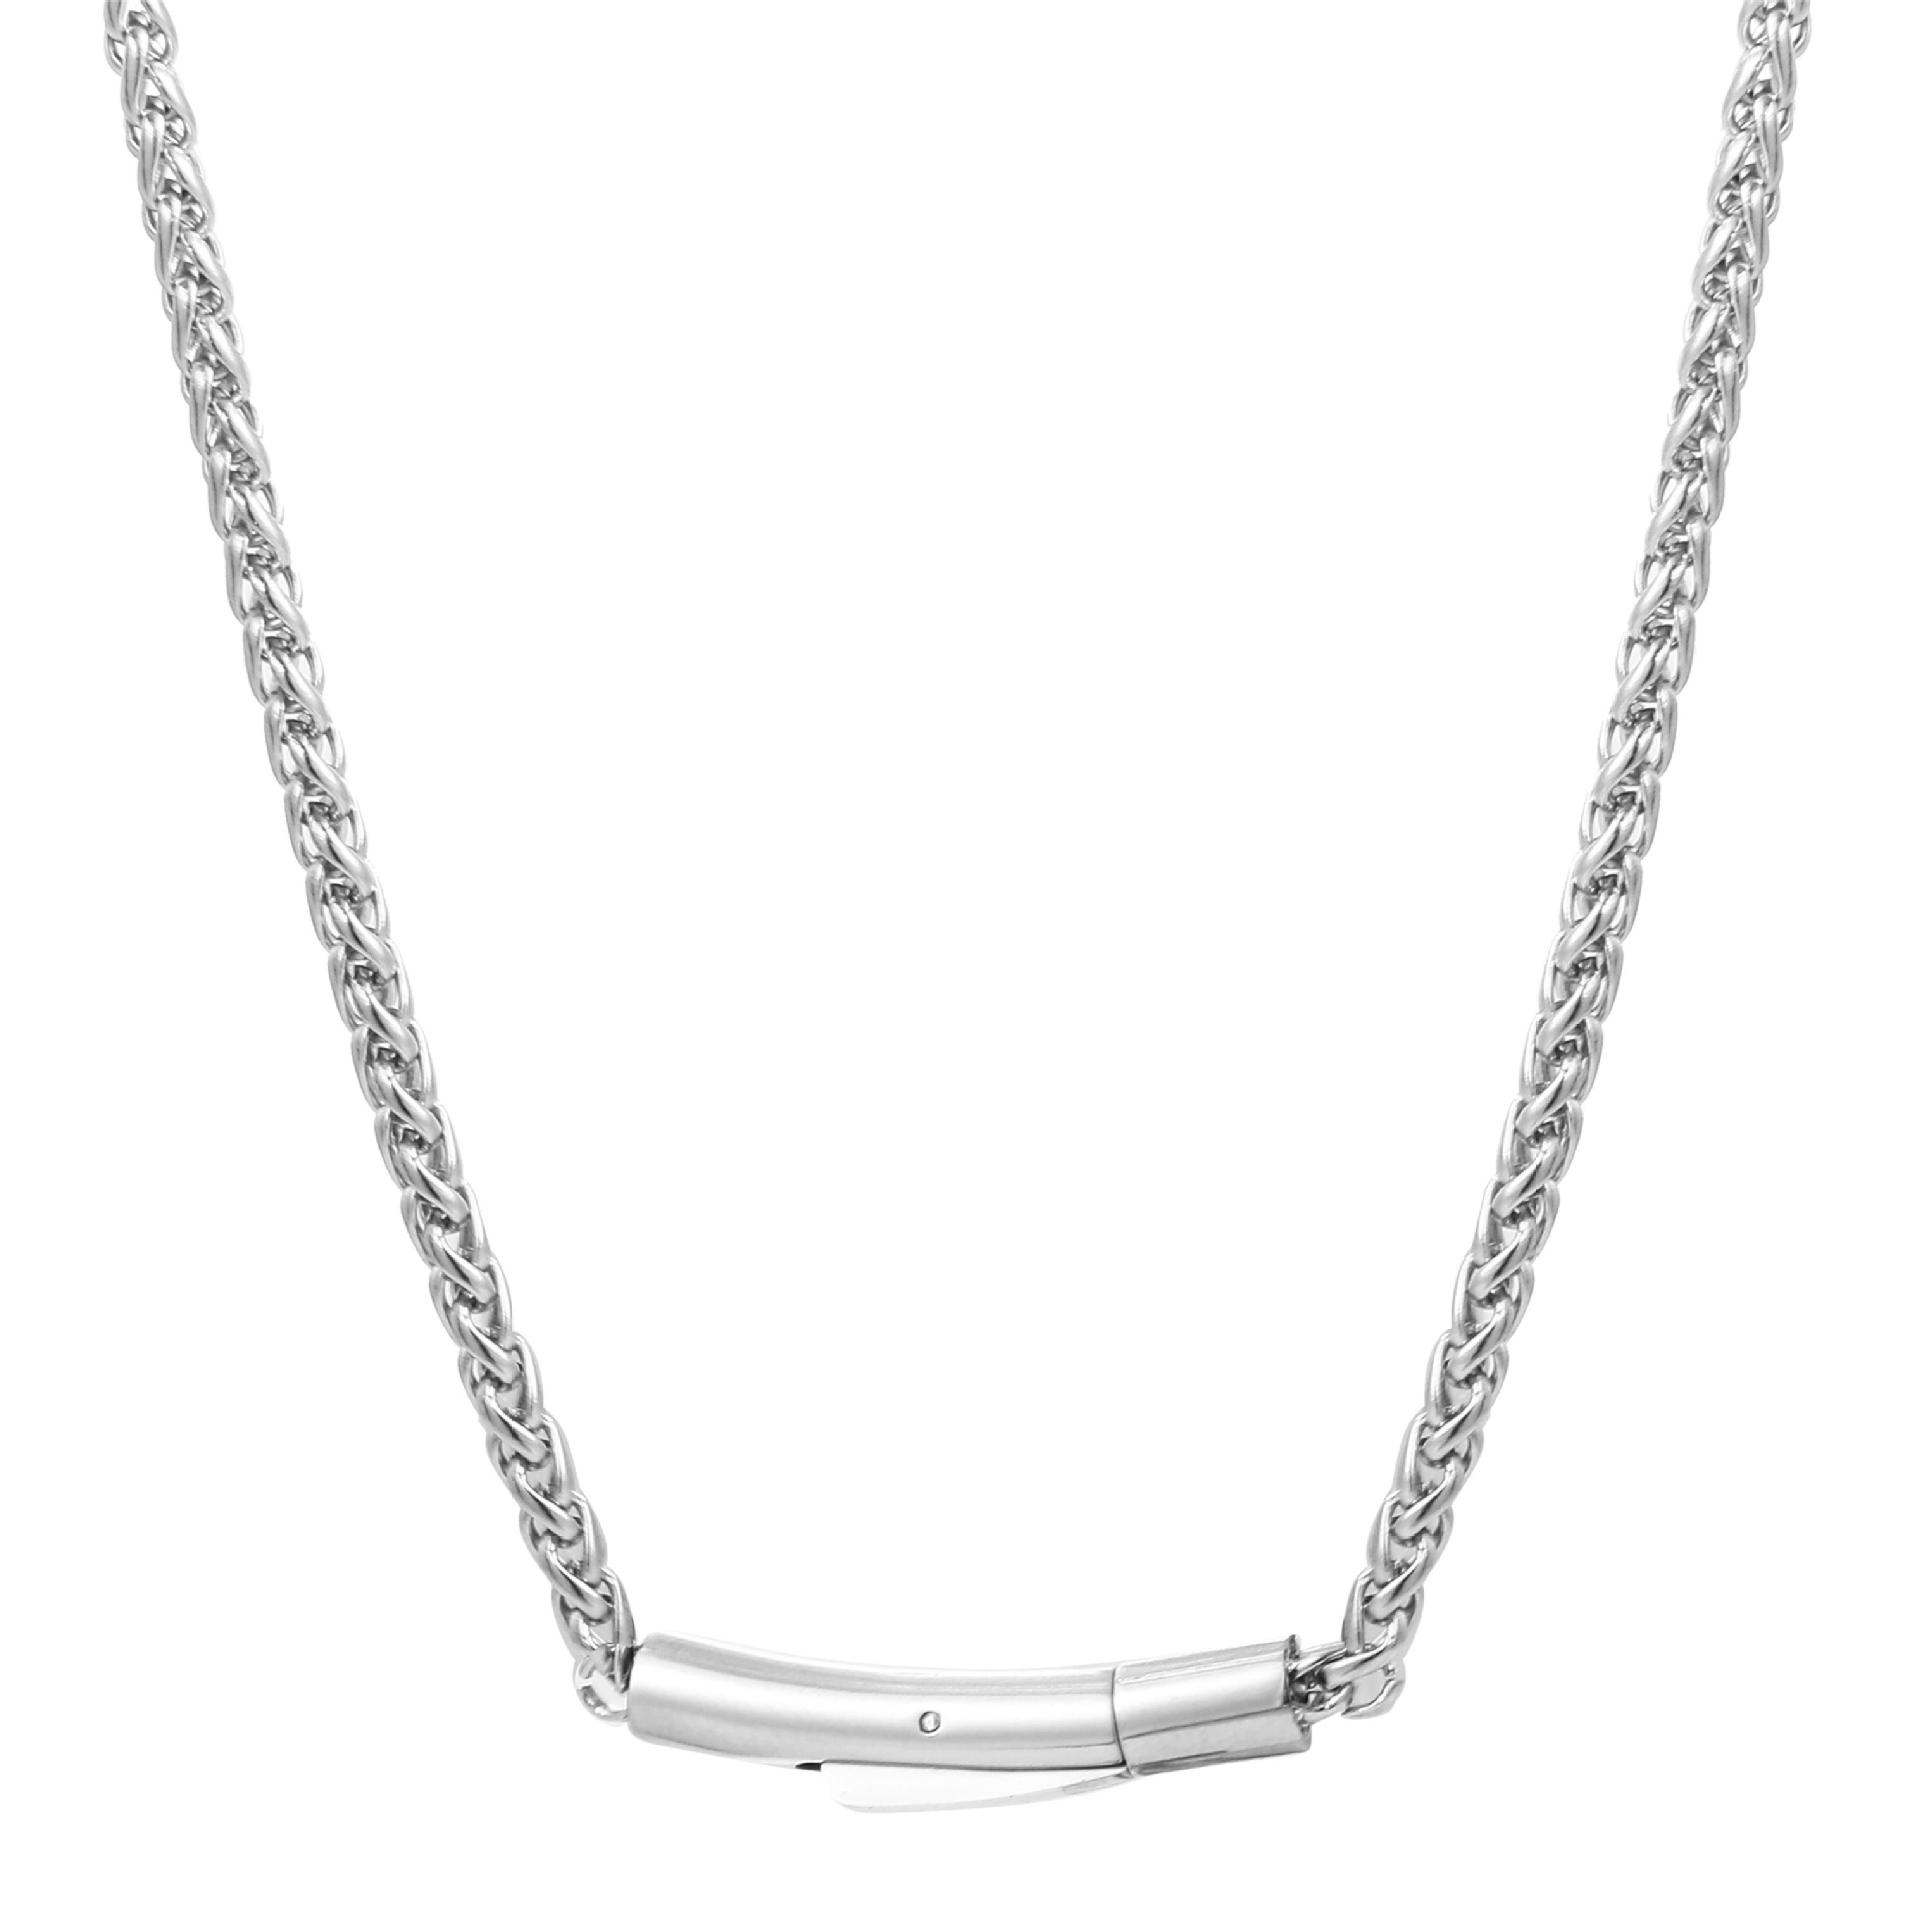 3MM wide steel necklace 45CM